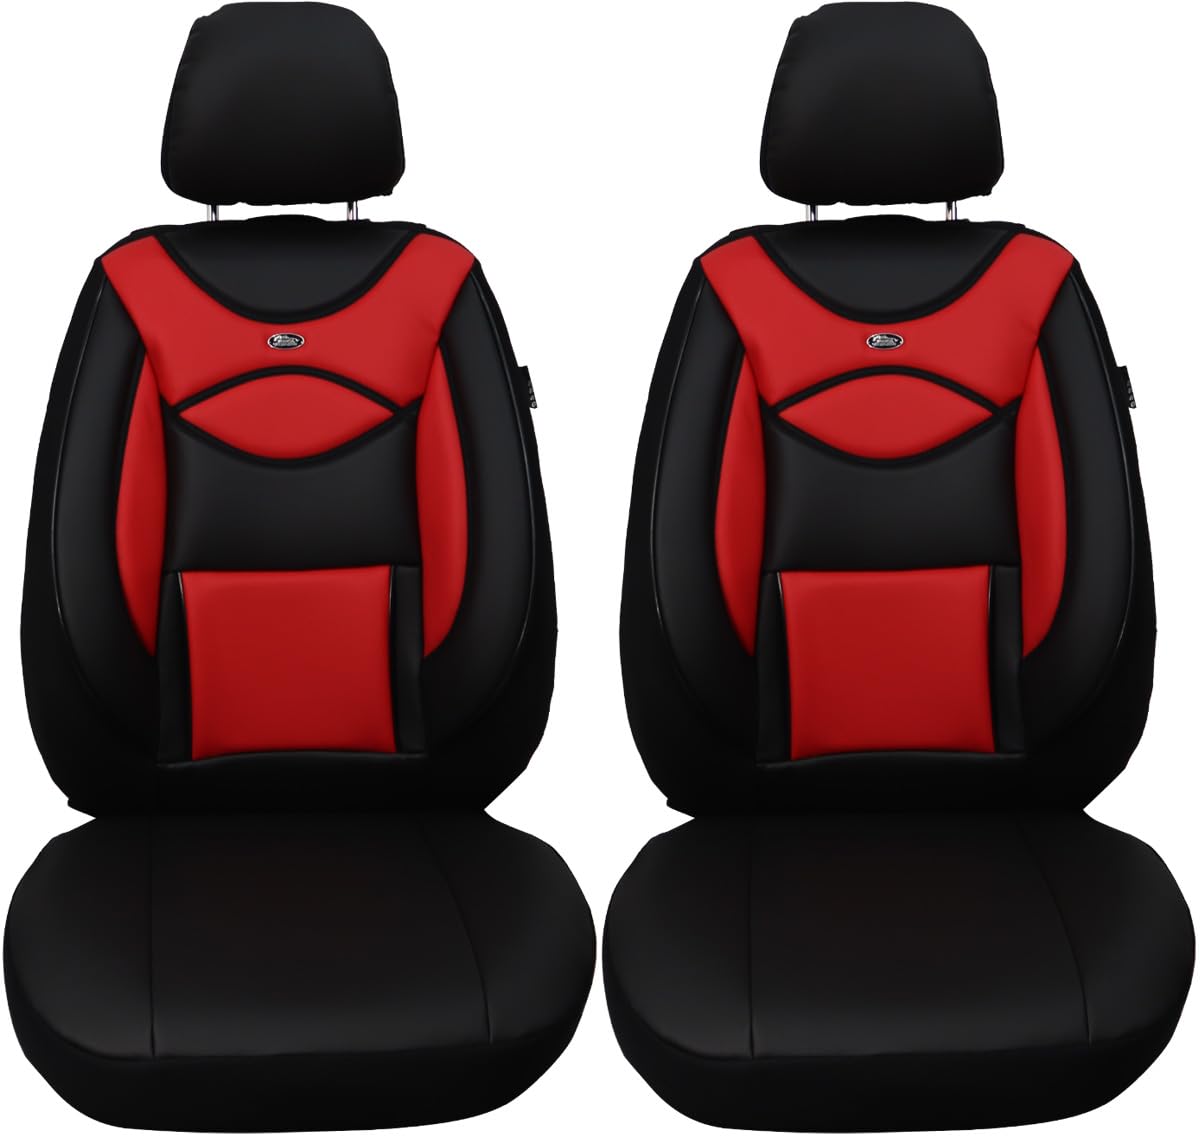 Auto Accessori Lupex - Sitzbezüge für Autositz, kompatibel